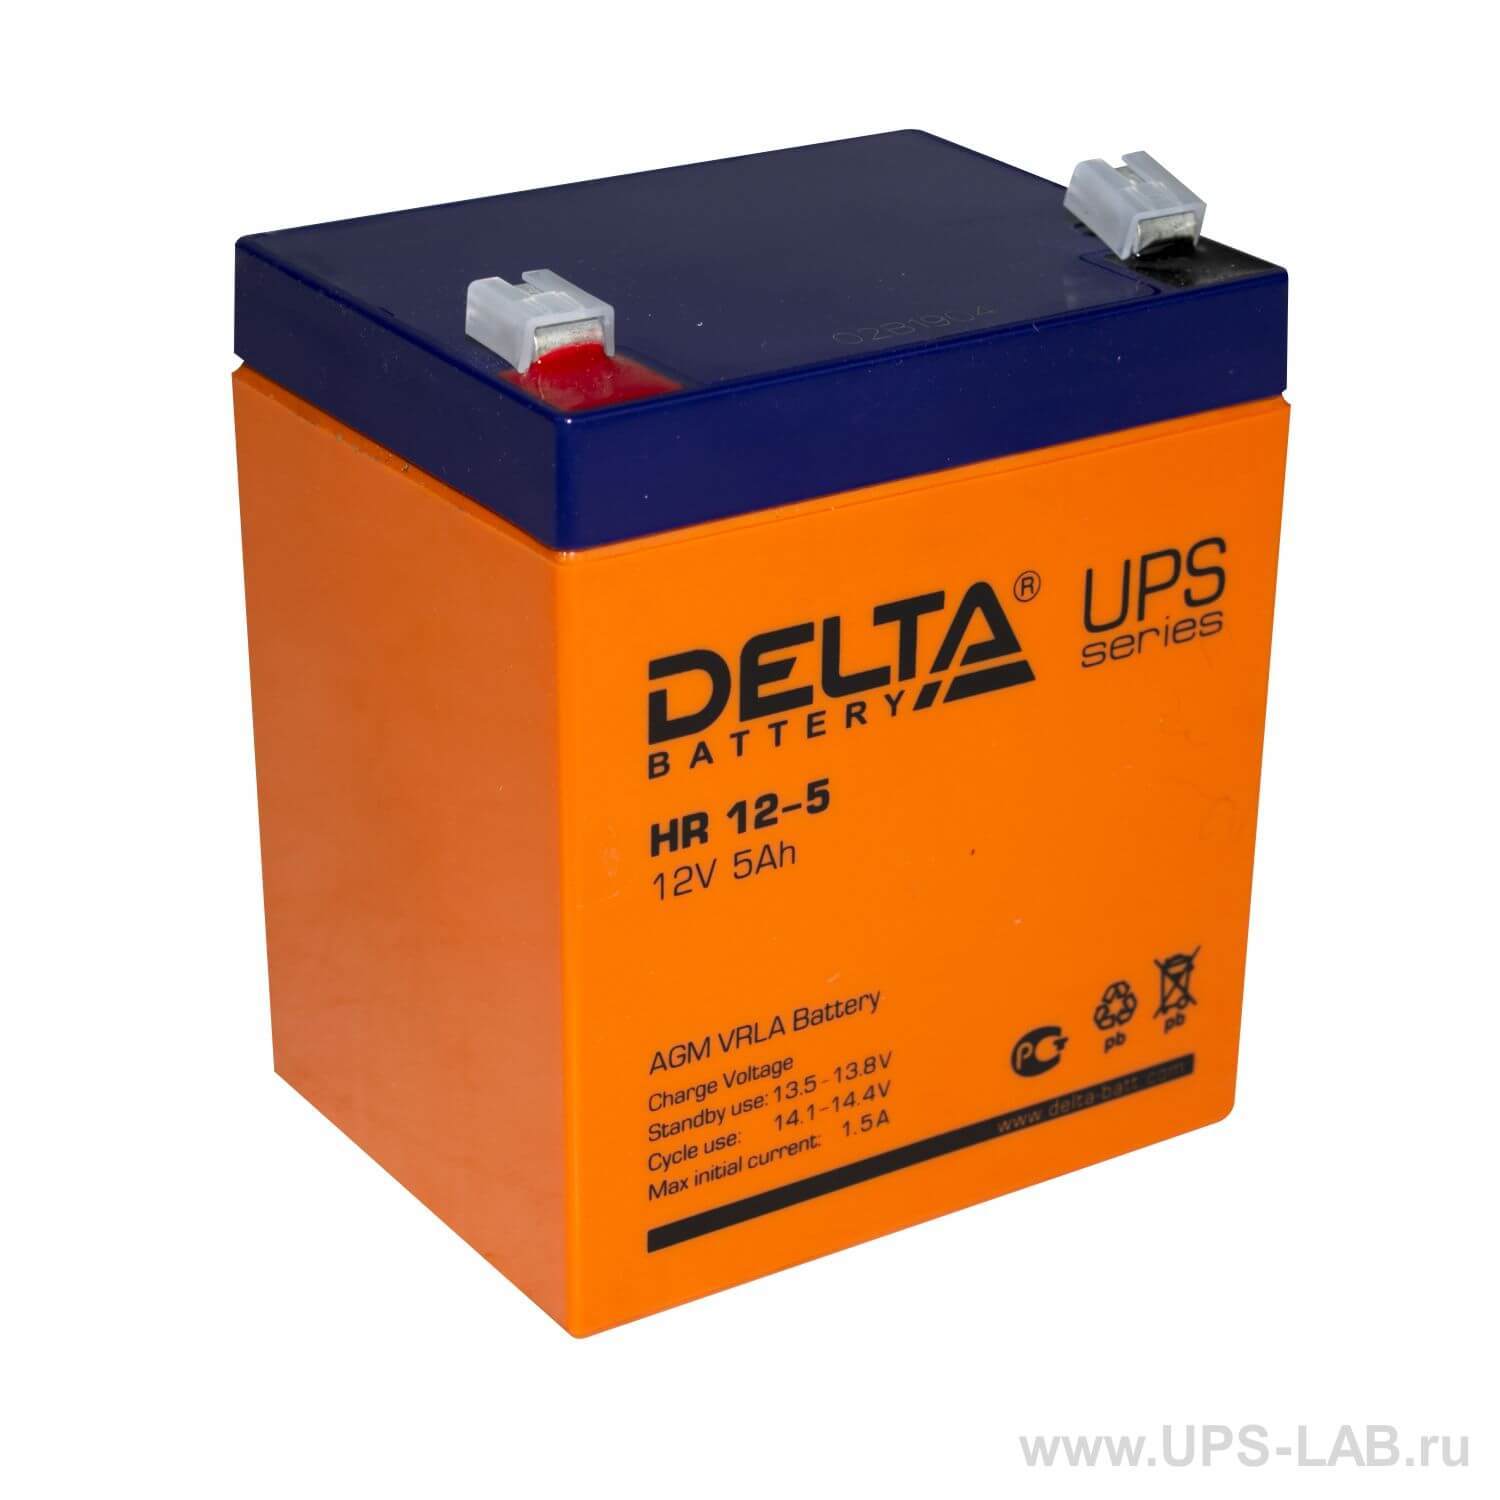 Батареи 12v 5ah. Аккумуляторная батарея Delta HR 12-5 (12v / 5ah). Аккумуляторная батарея Delta Battery HR 12-5. Delta hr12-12 (12в/12ач). Аккумуляторная батарея Delta HR 12-12 (12v / 12ah).